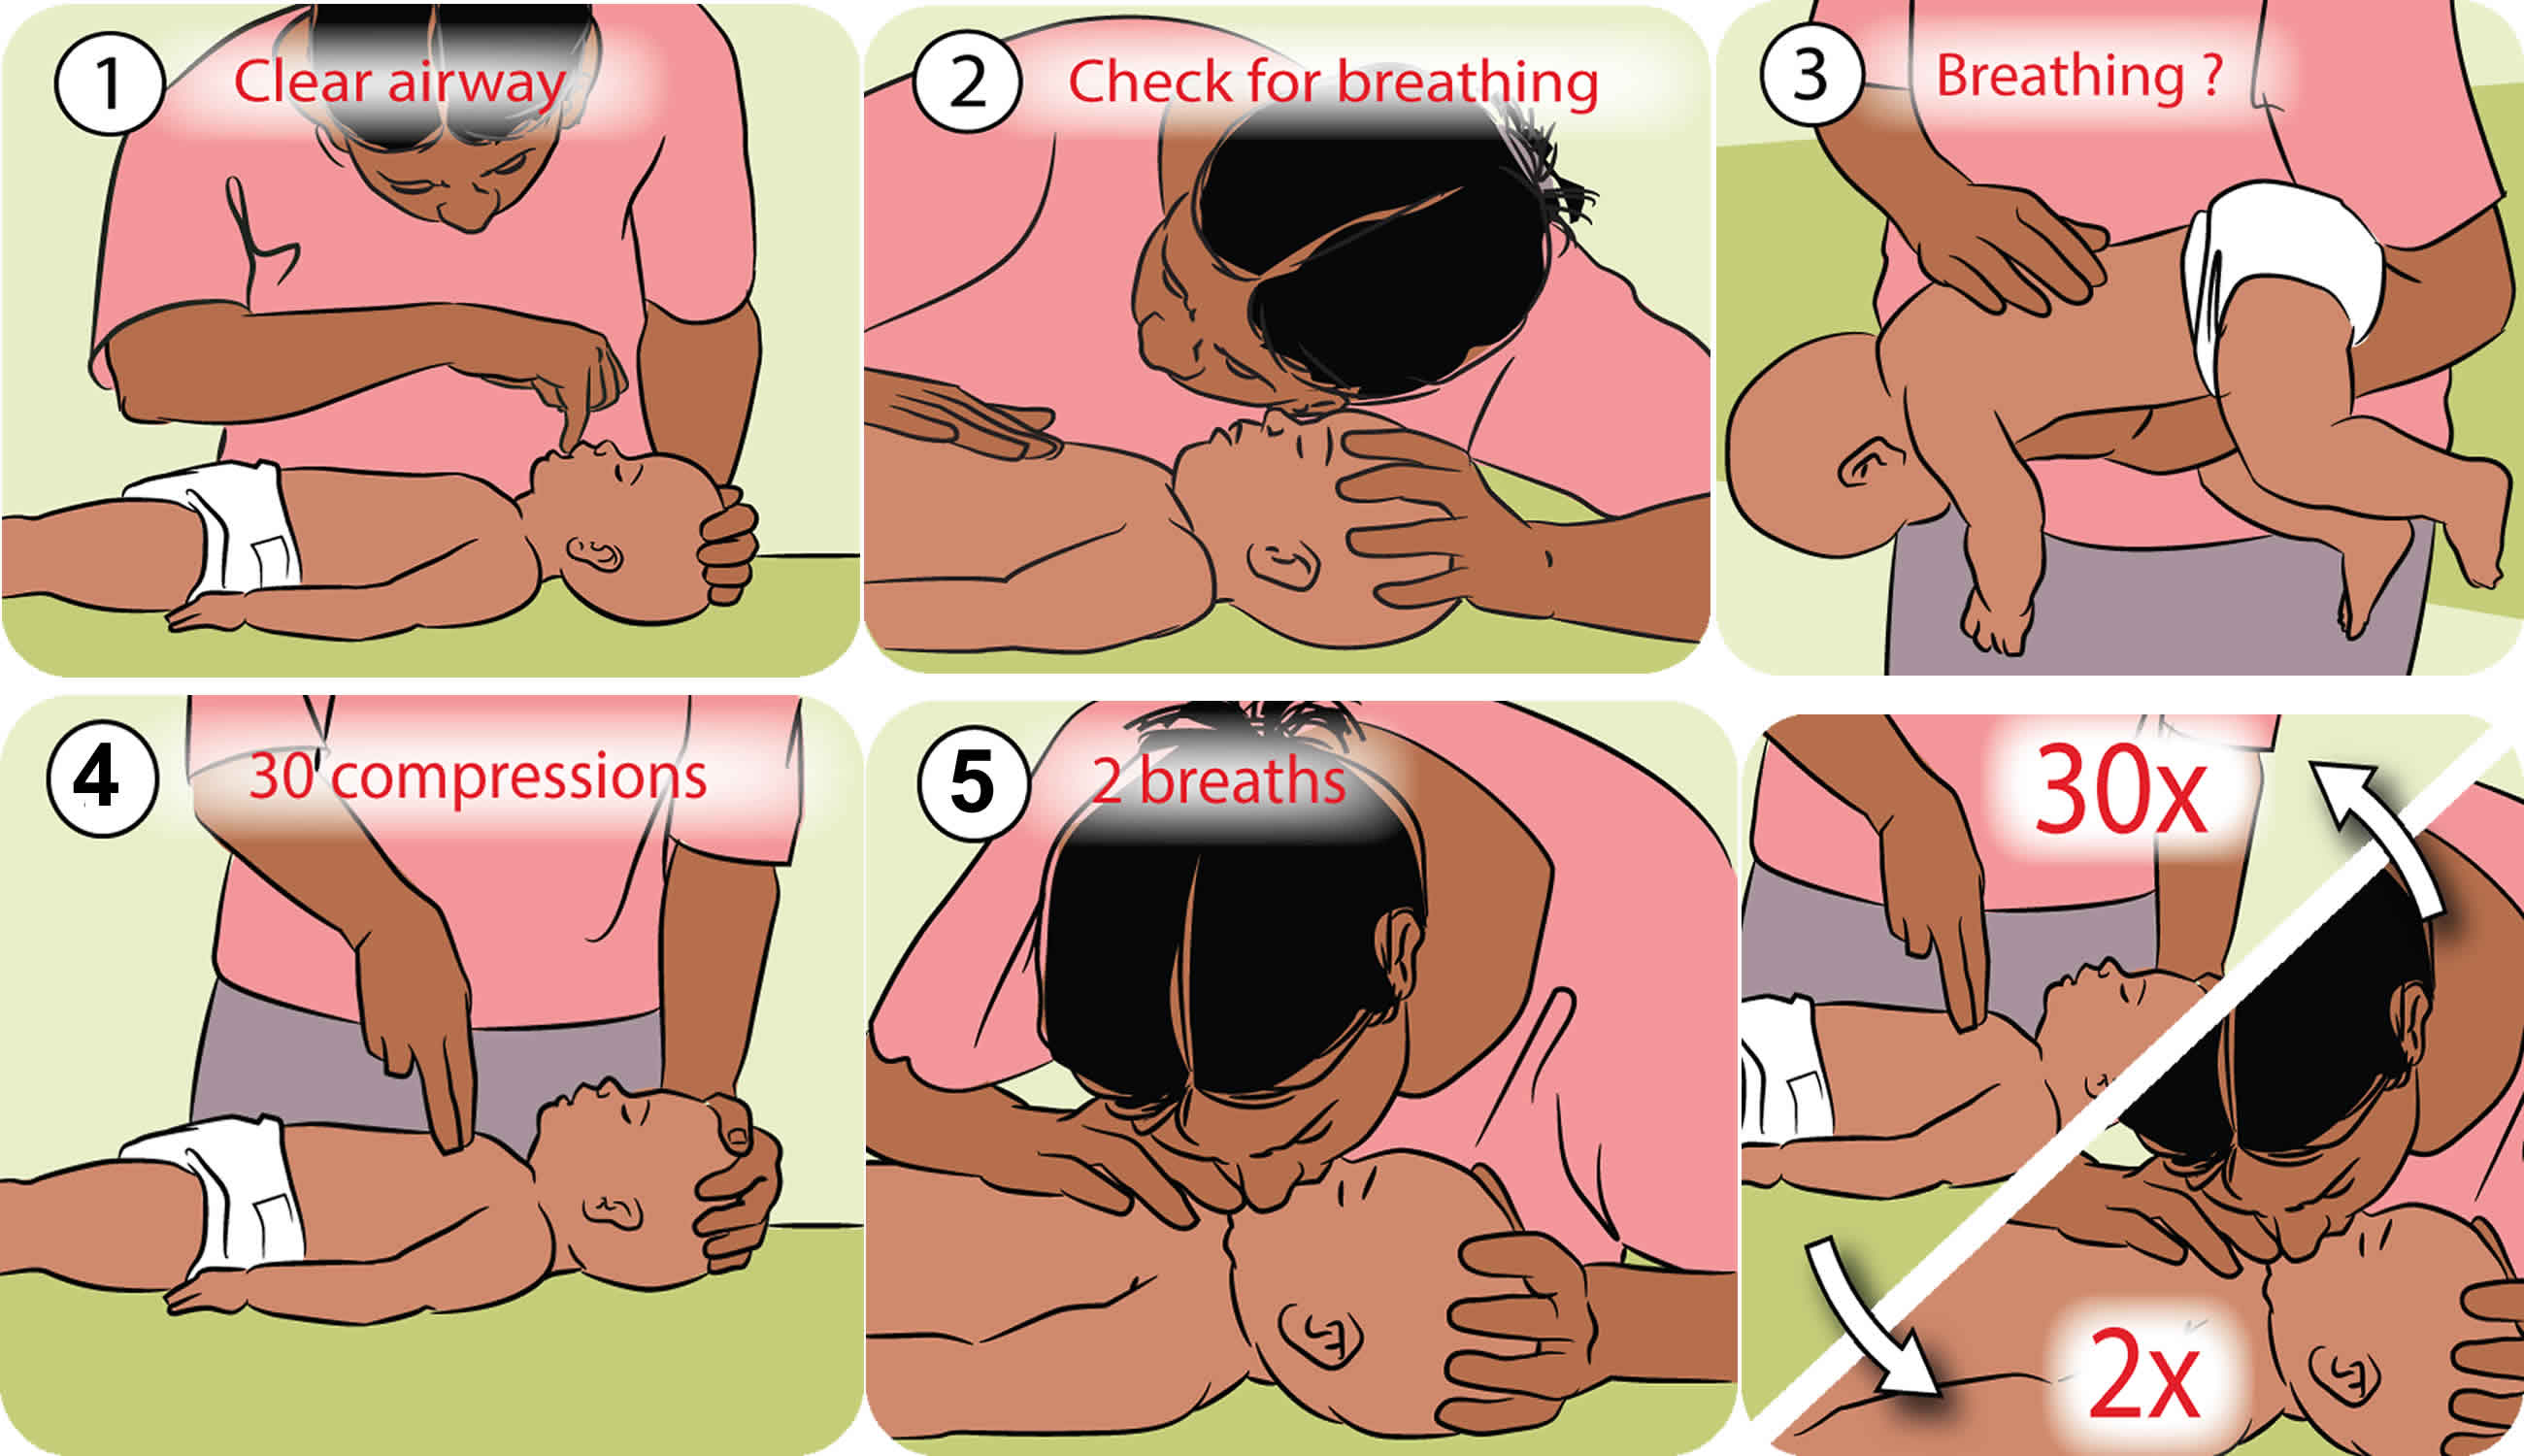 cardiopulmonary resuscitation for babies under 12 months